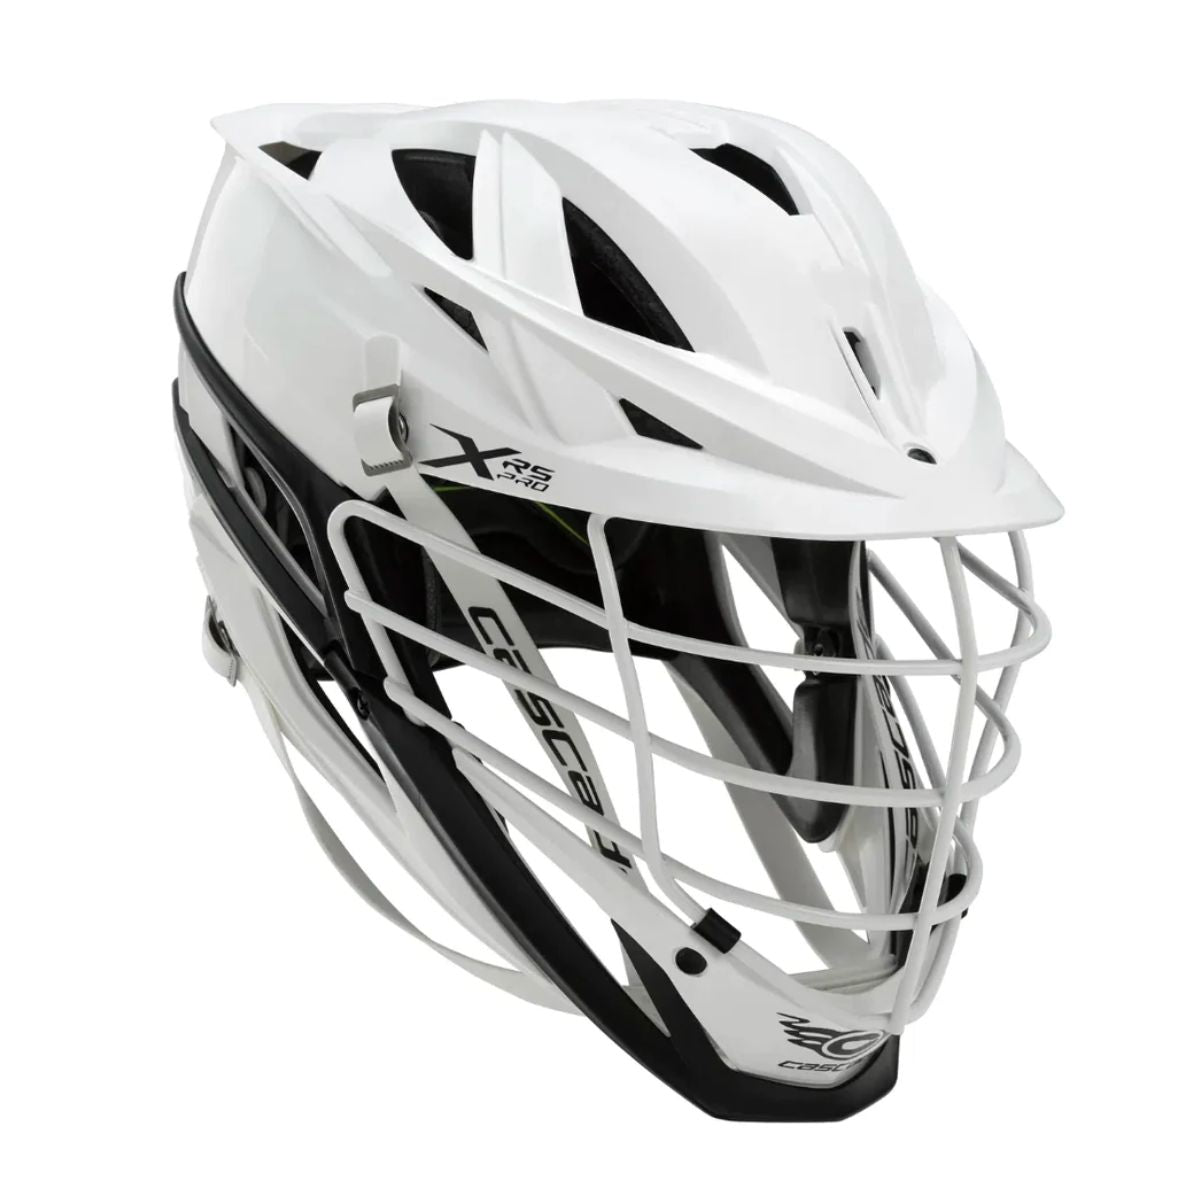 Cascade XRS Pro Stock Helmet